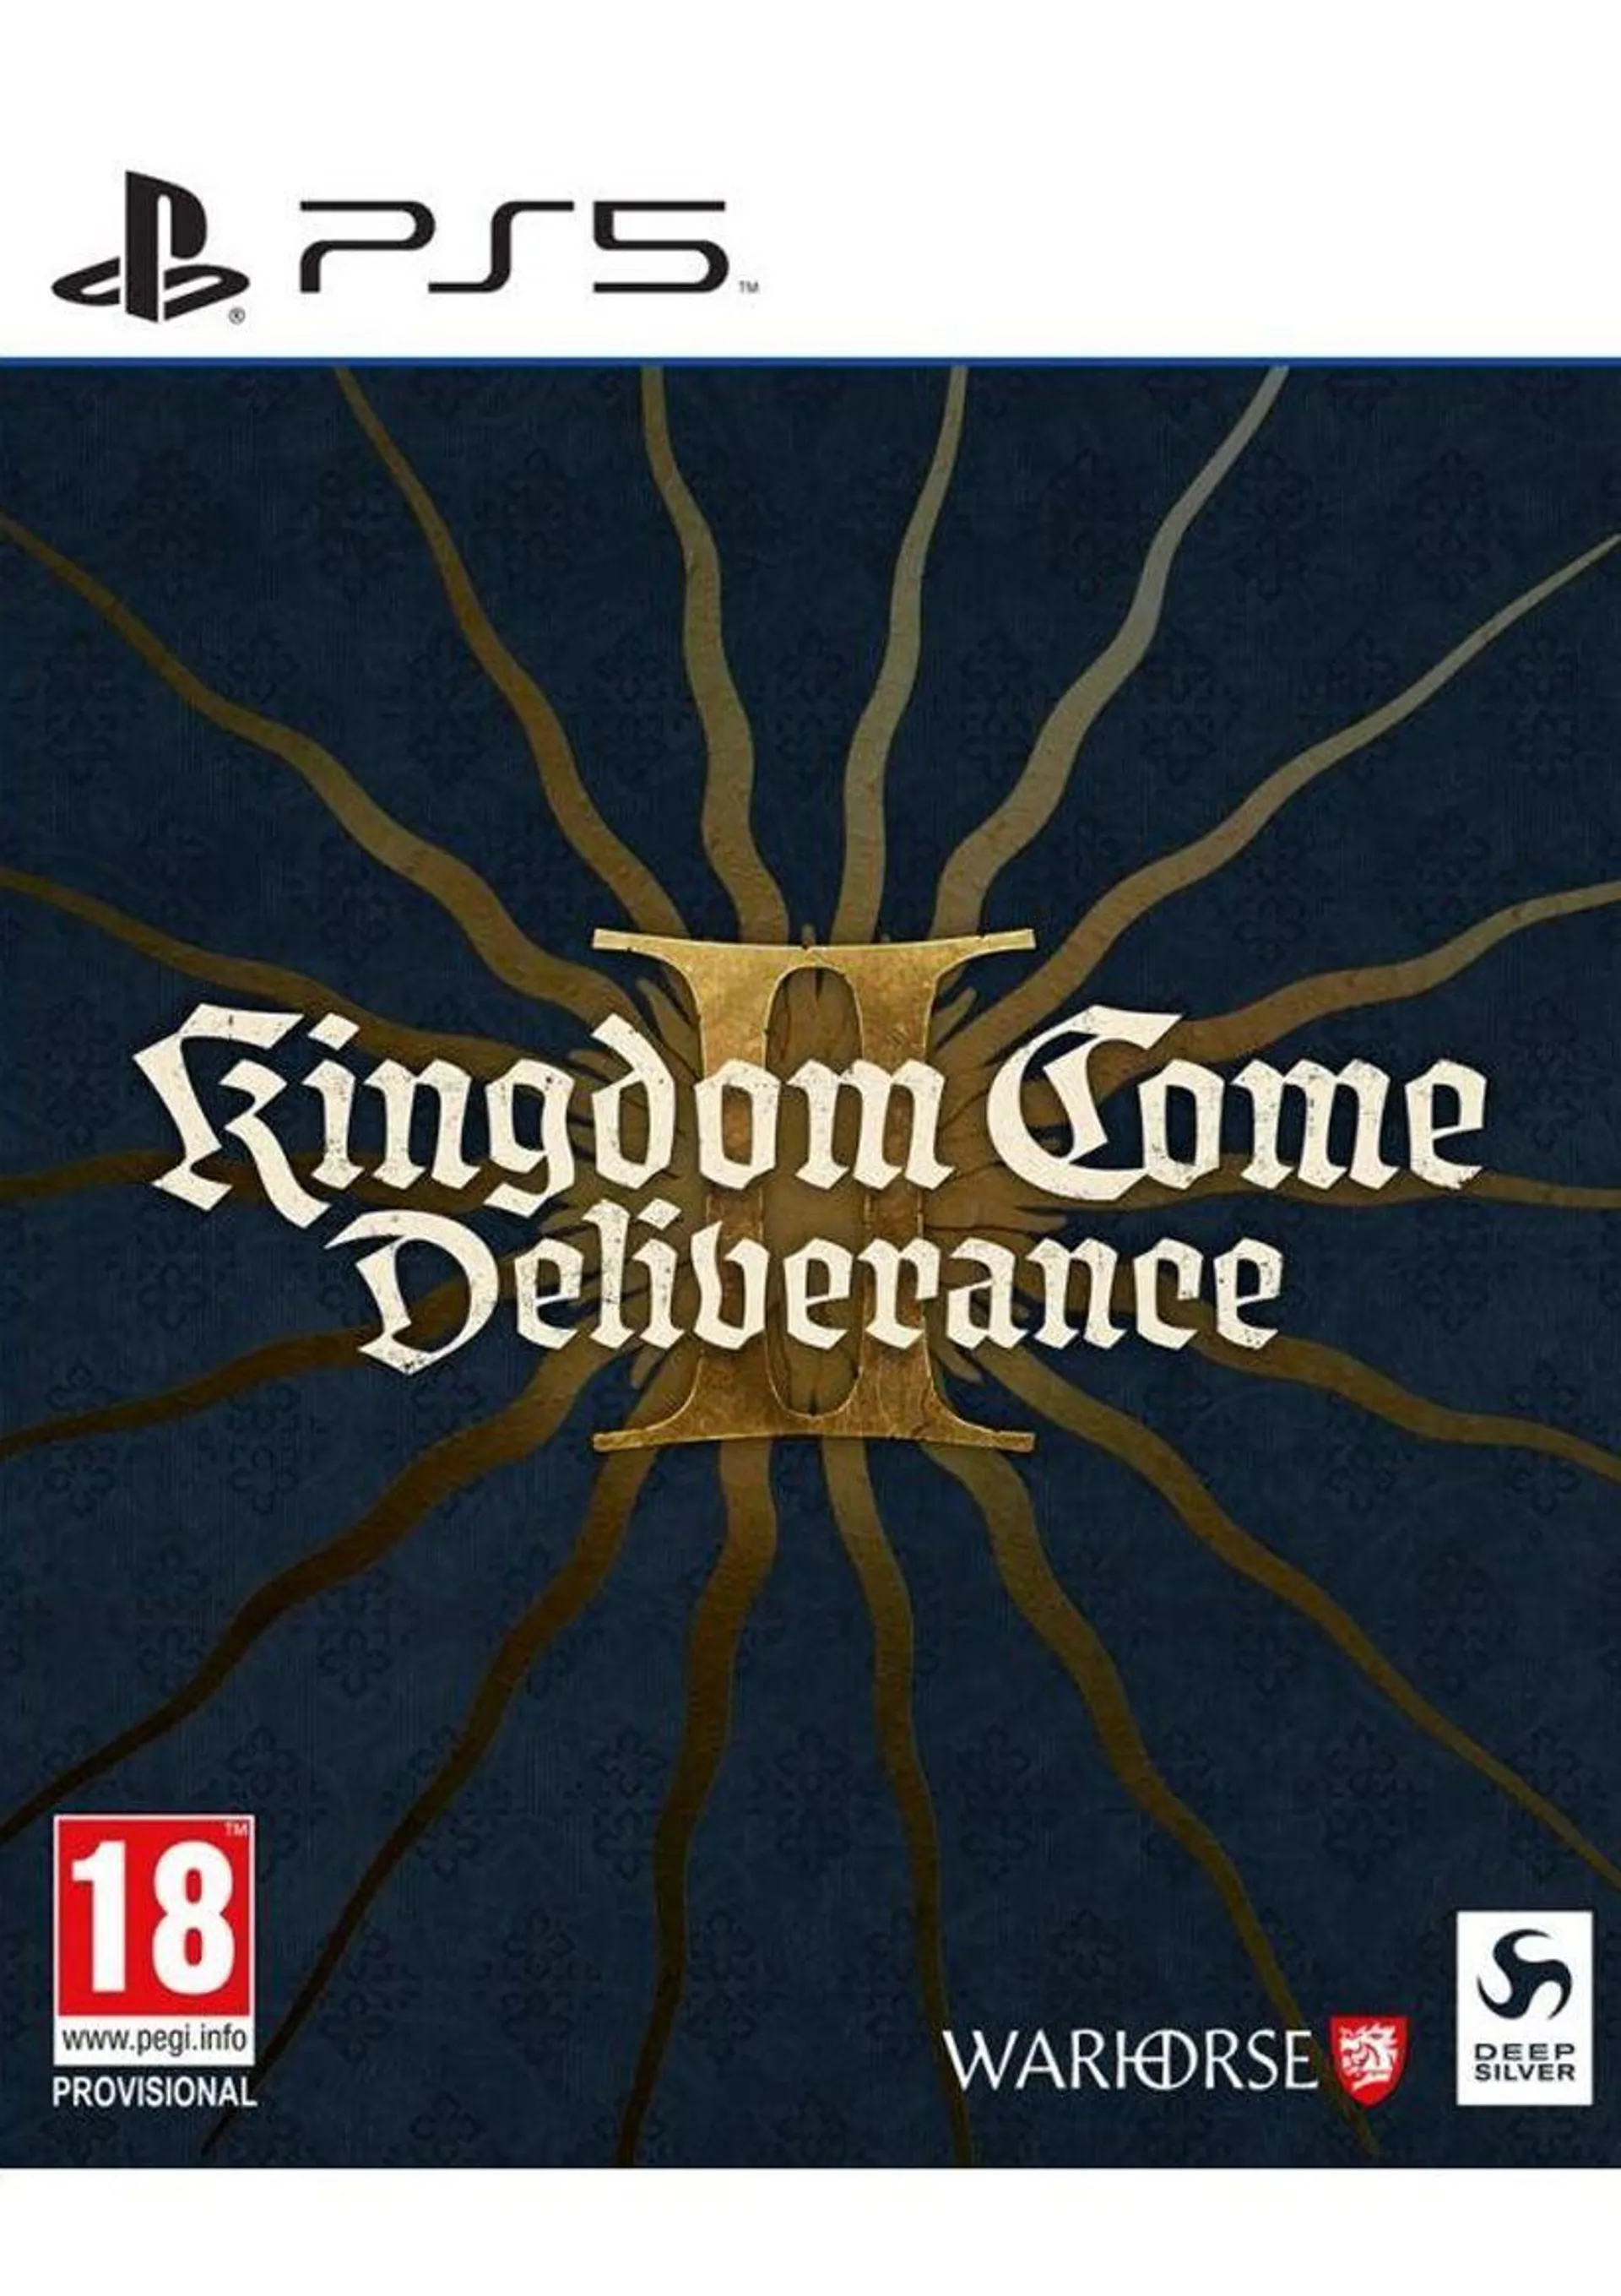 Kingdom Come: Deliverance II on PlayStation 5